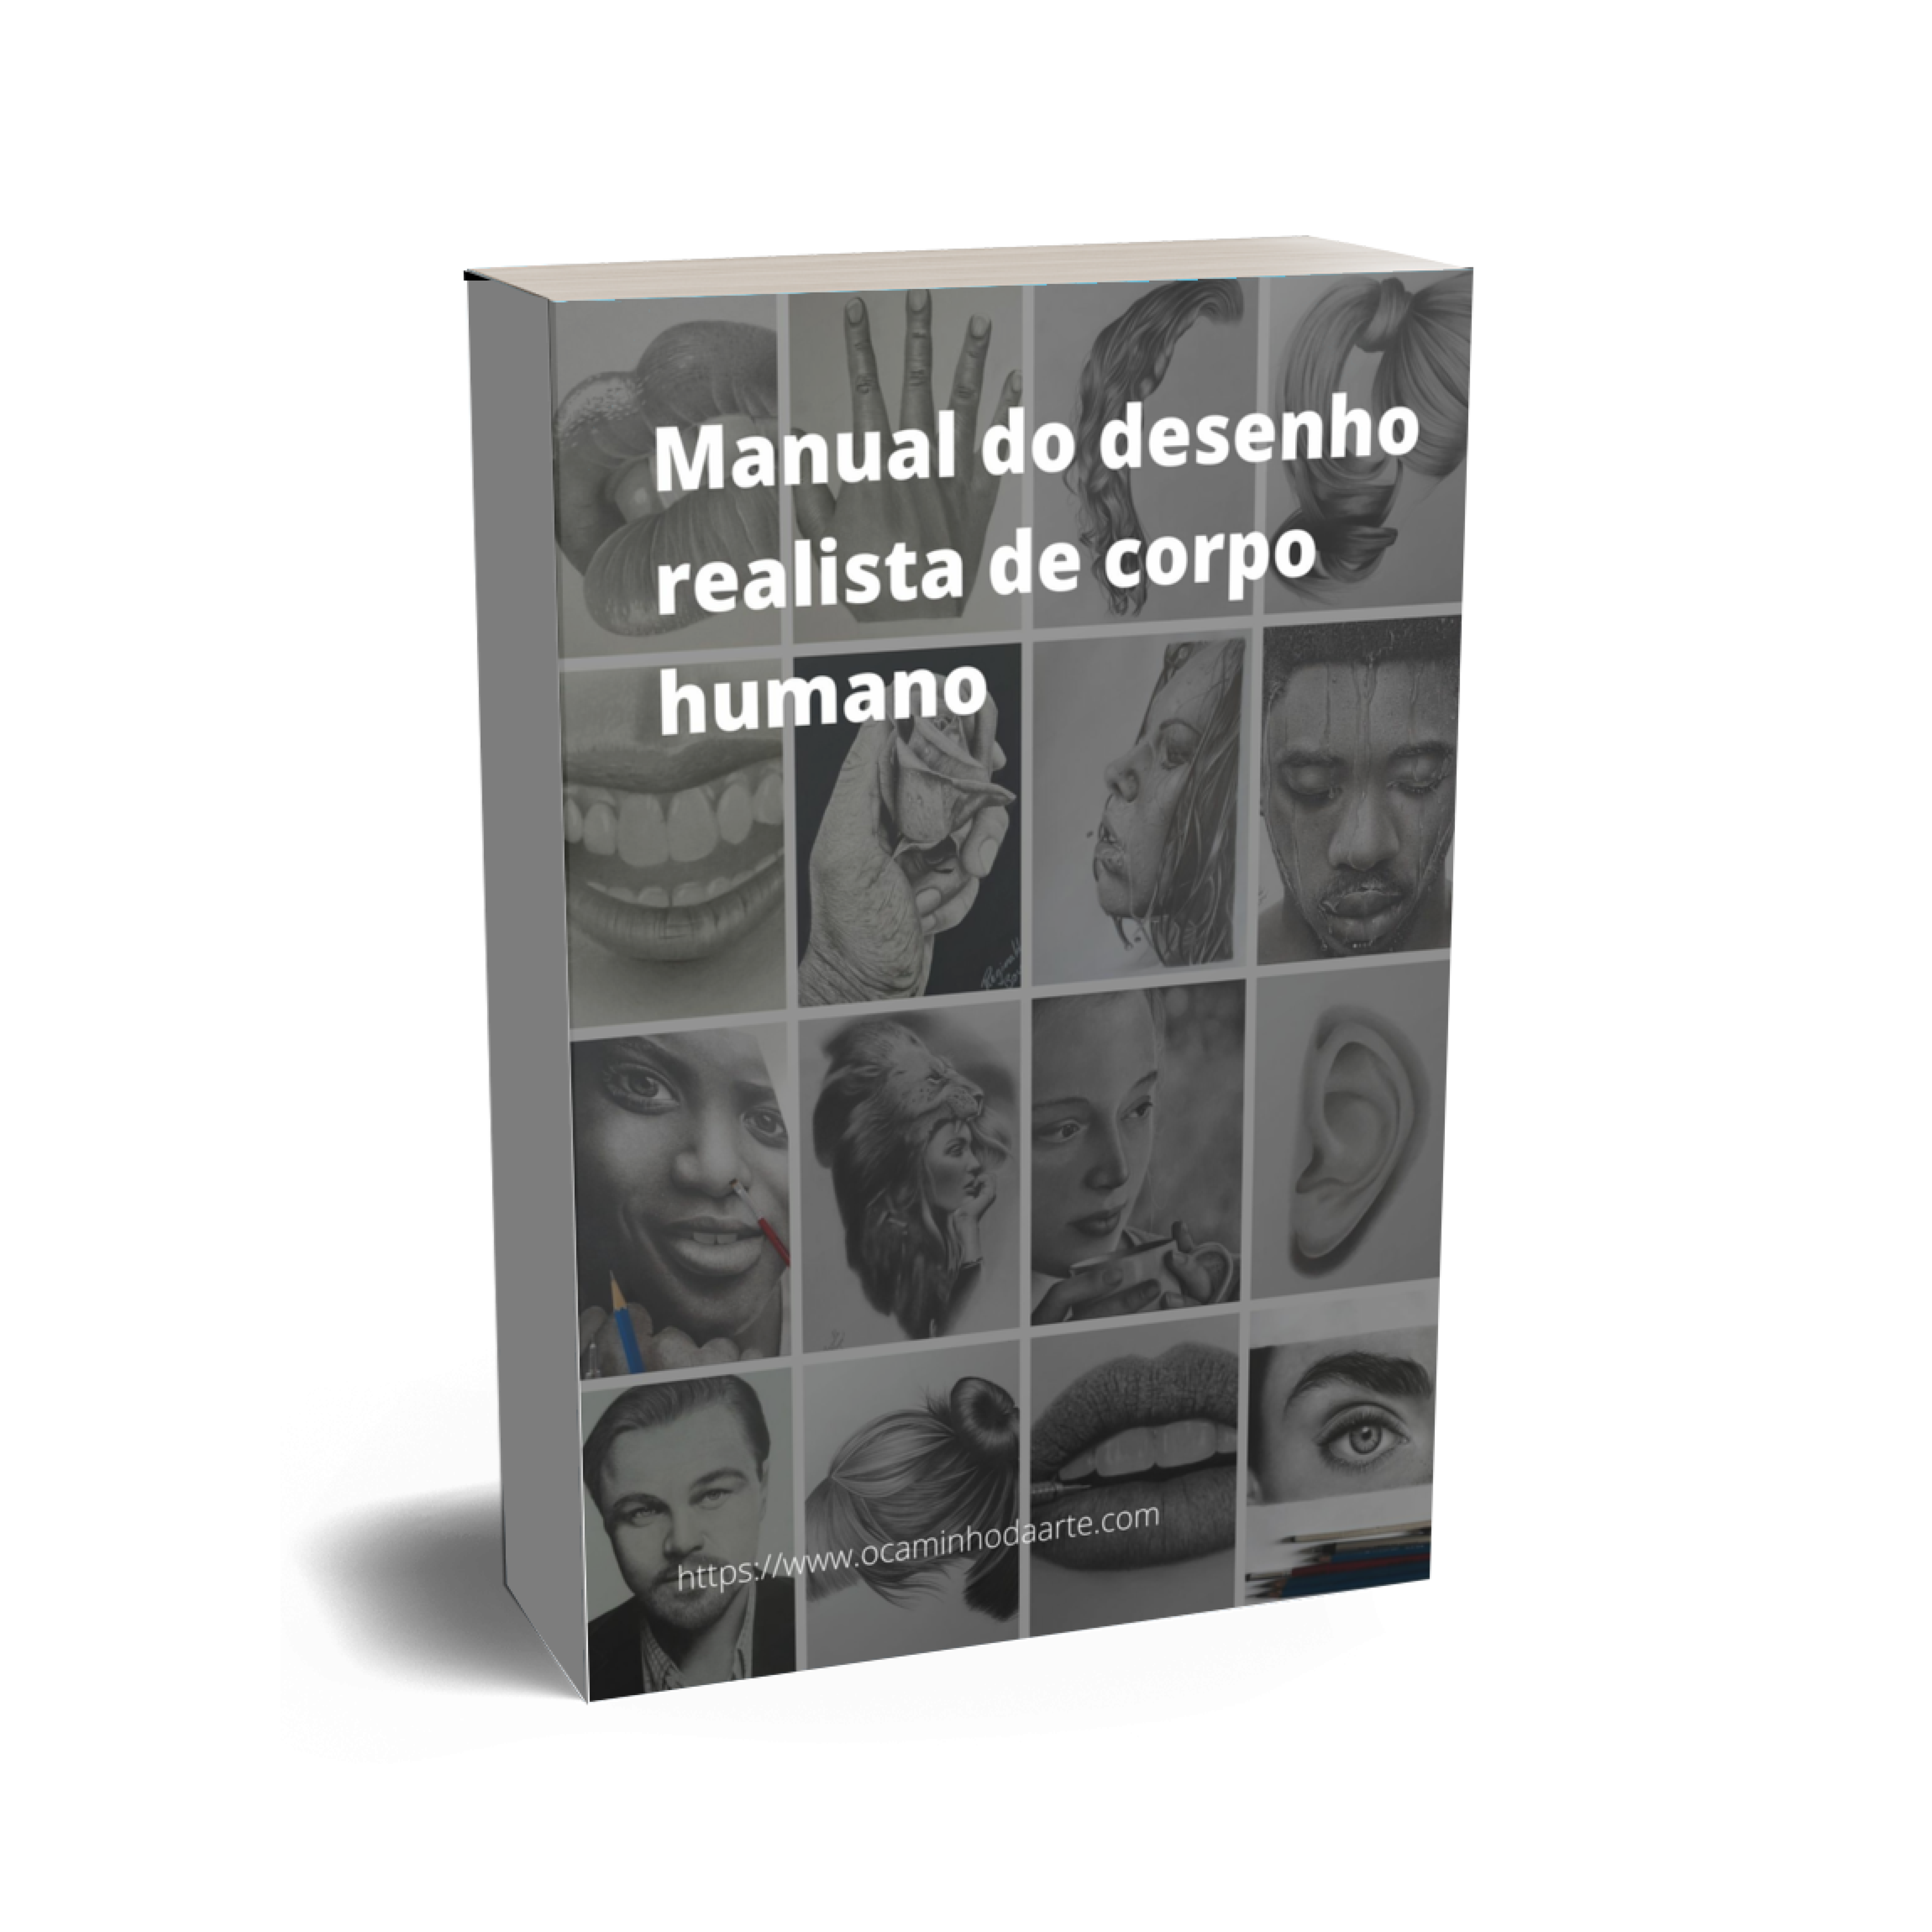 1654493617 ppwh4t6vyplpee8tk2qf8qg4n7zi097b5h1y9iv900 - E-Book Grátis Manual do Desenho Realista de Corpo Humano